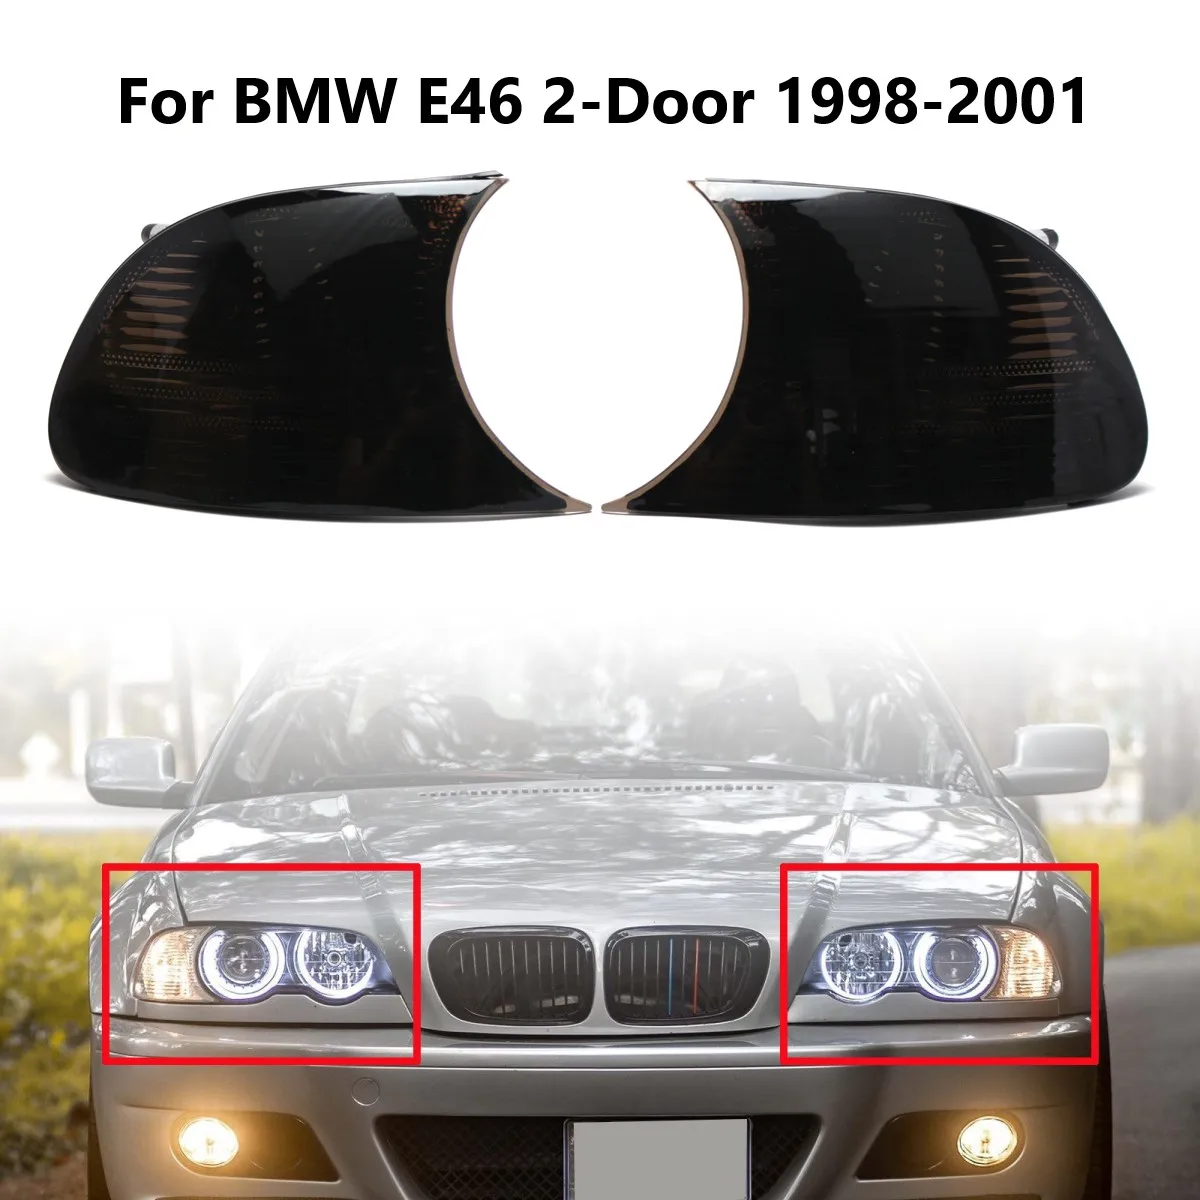 Par Esquerda e Direita Turn Signal Blinker, Tampa da lâmpada de canto lateral, Estilo do carro para BMW E46 2 portas 1998 1999 2000 2001, 63126904299